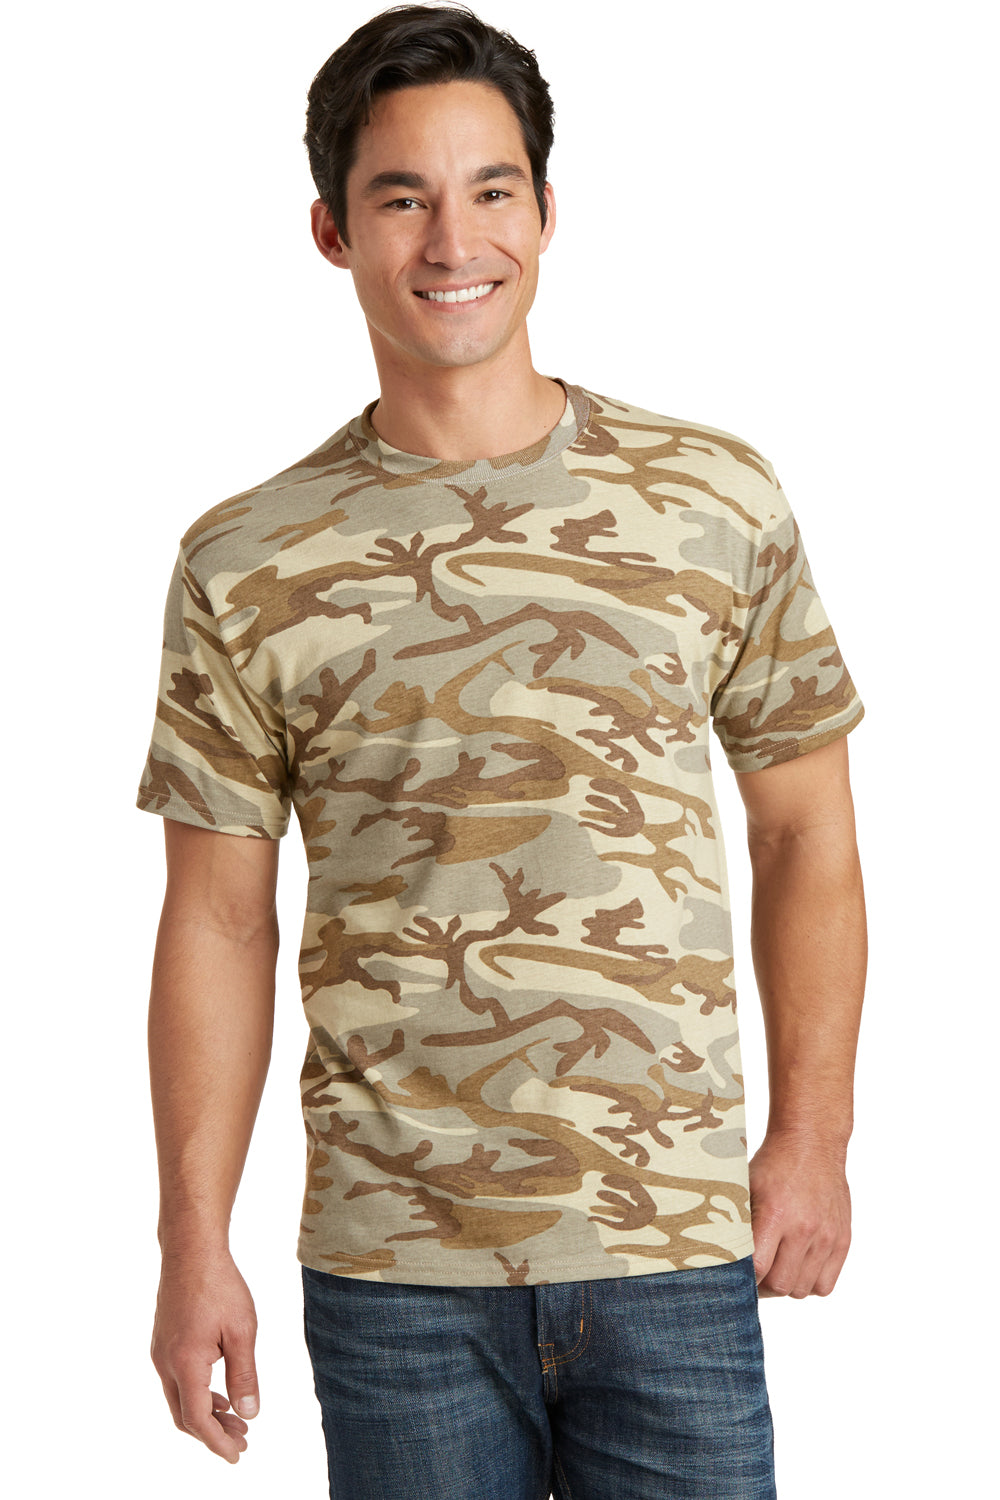 Port & Company PC54C Mens Core Short Sleeve Crewneck T-Shirt Desert Camo Front